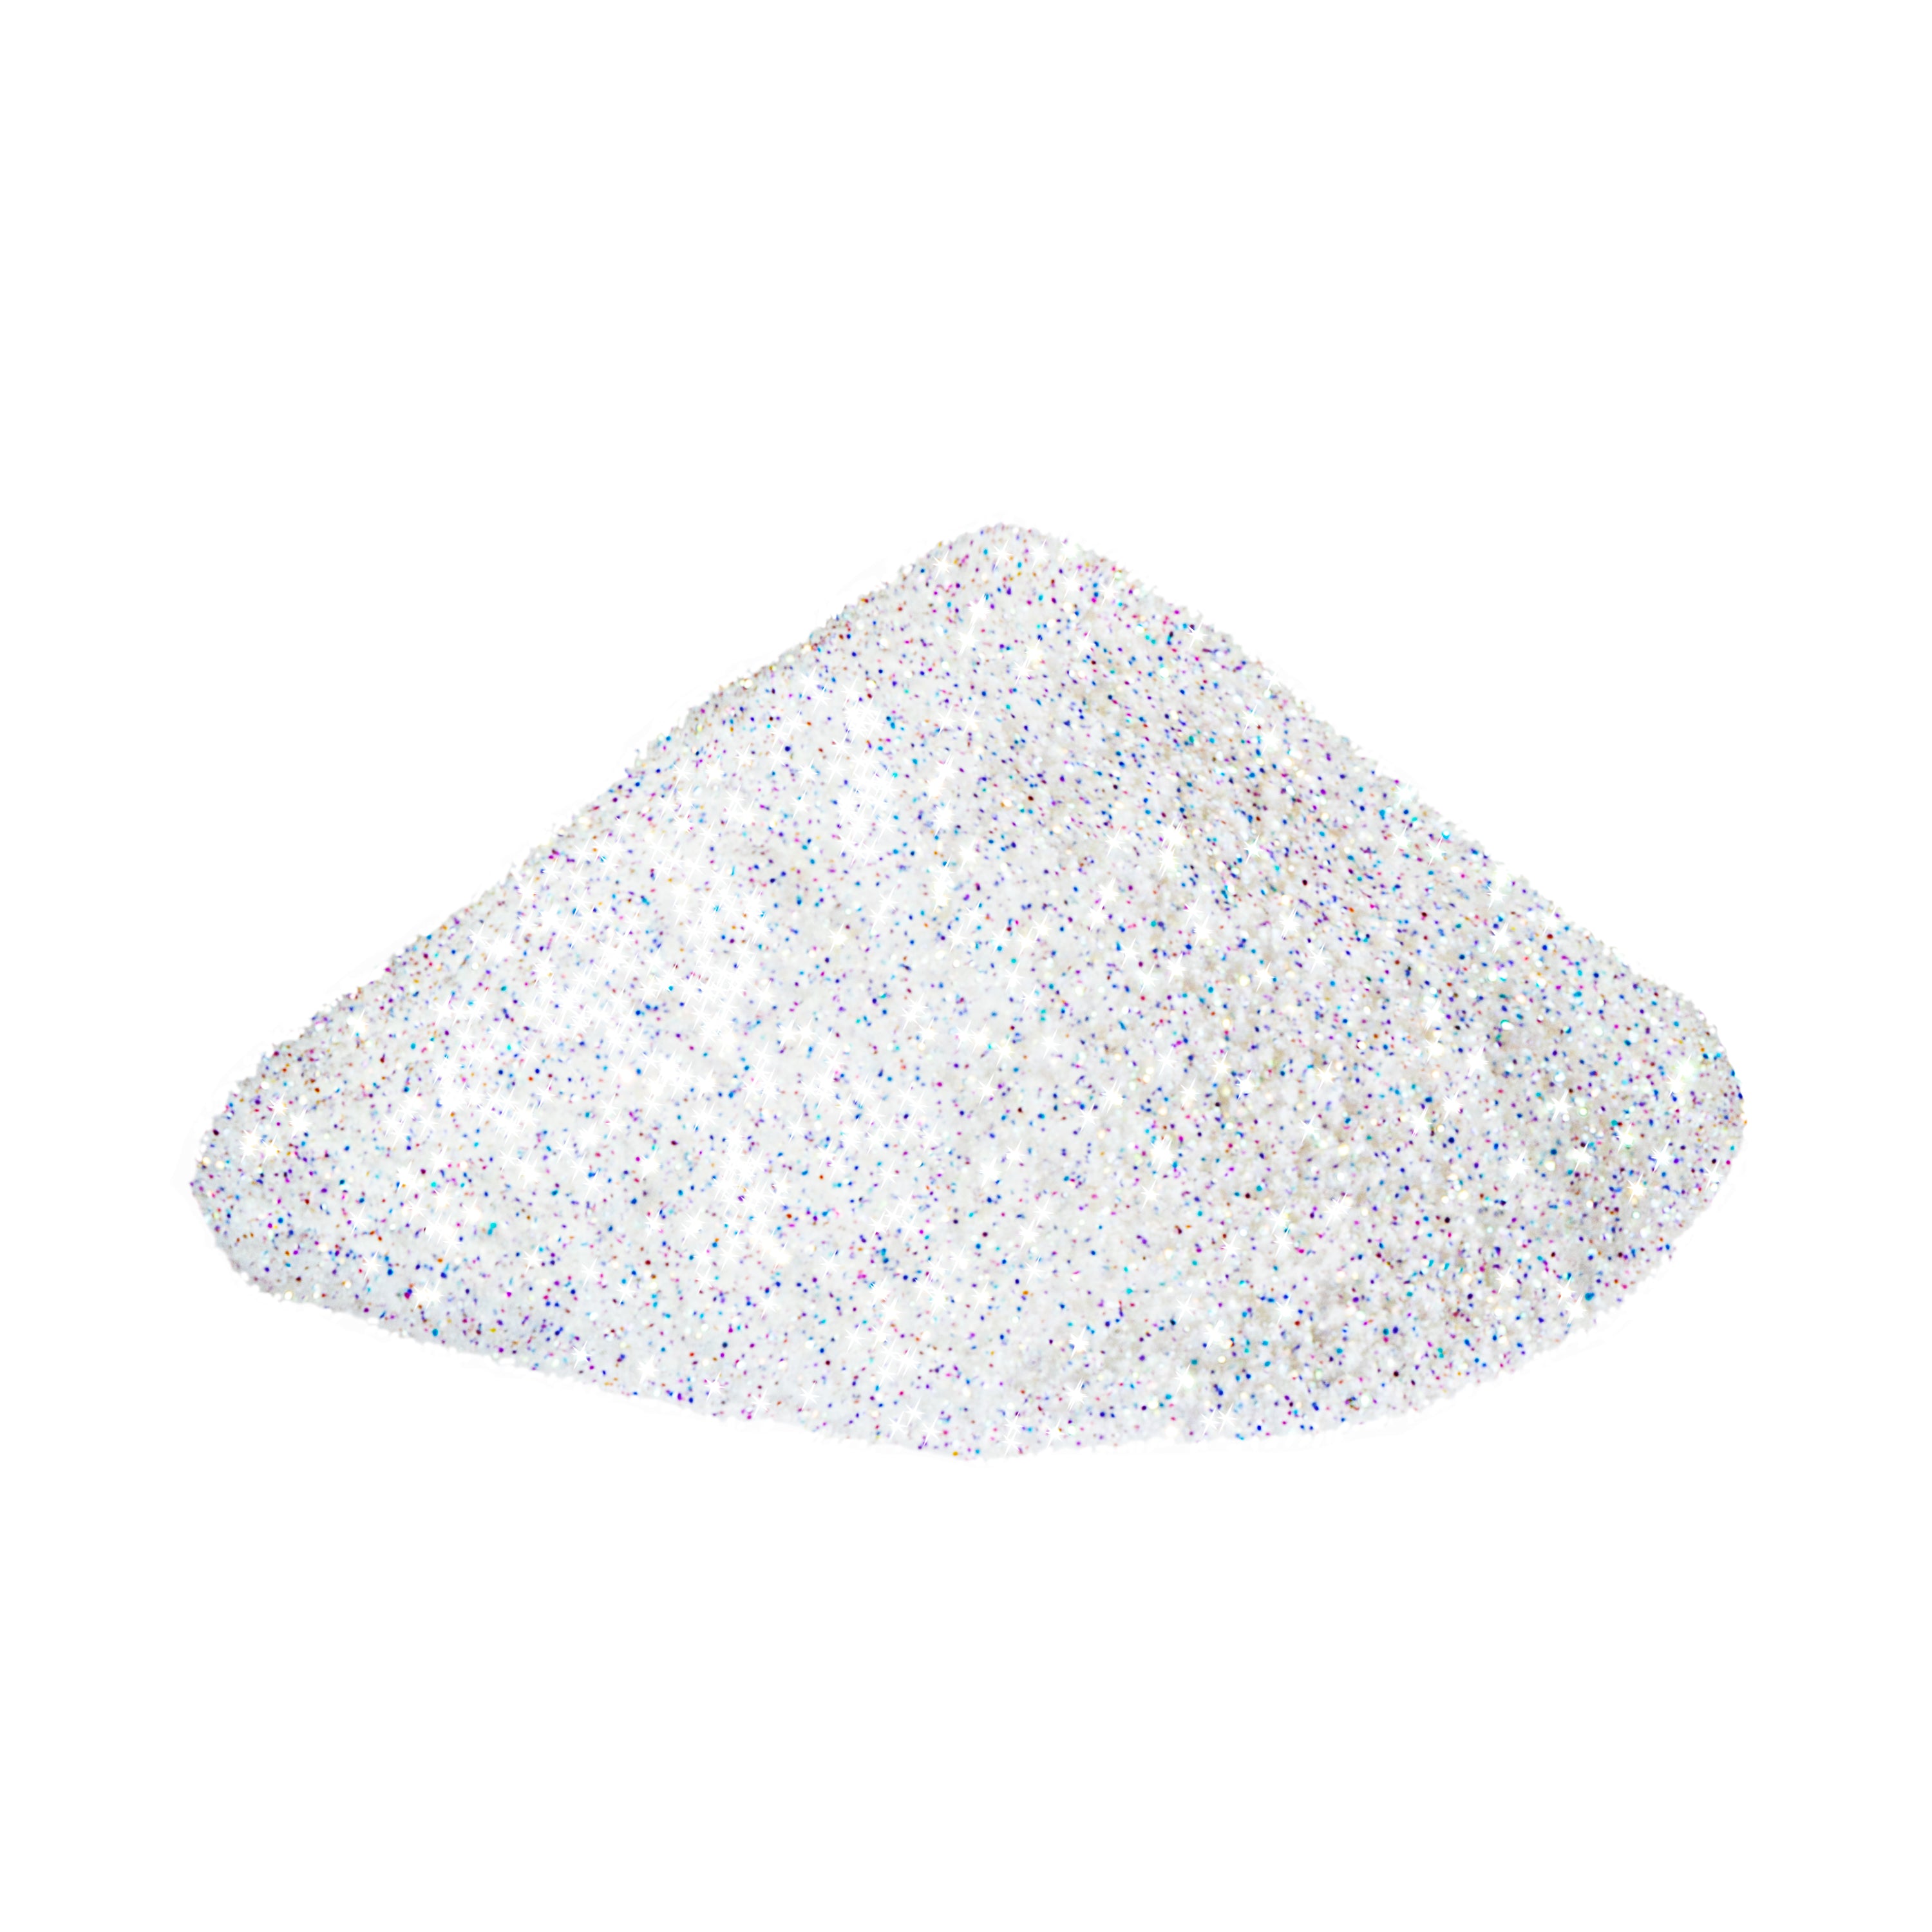 FIXY Biodegradable Cosmetic Glitter (Snowstorm White)